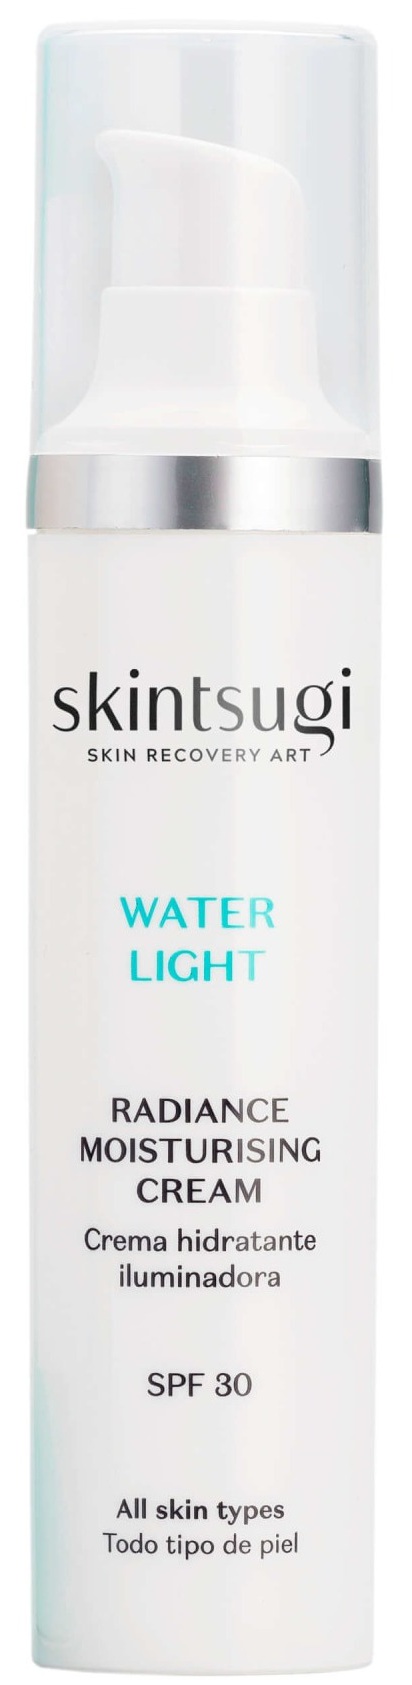 Skintsugi Water Light Radiance Moisturising Cream